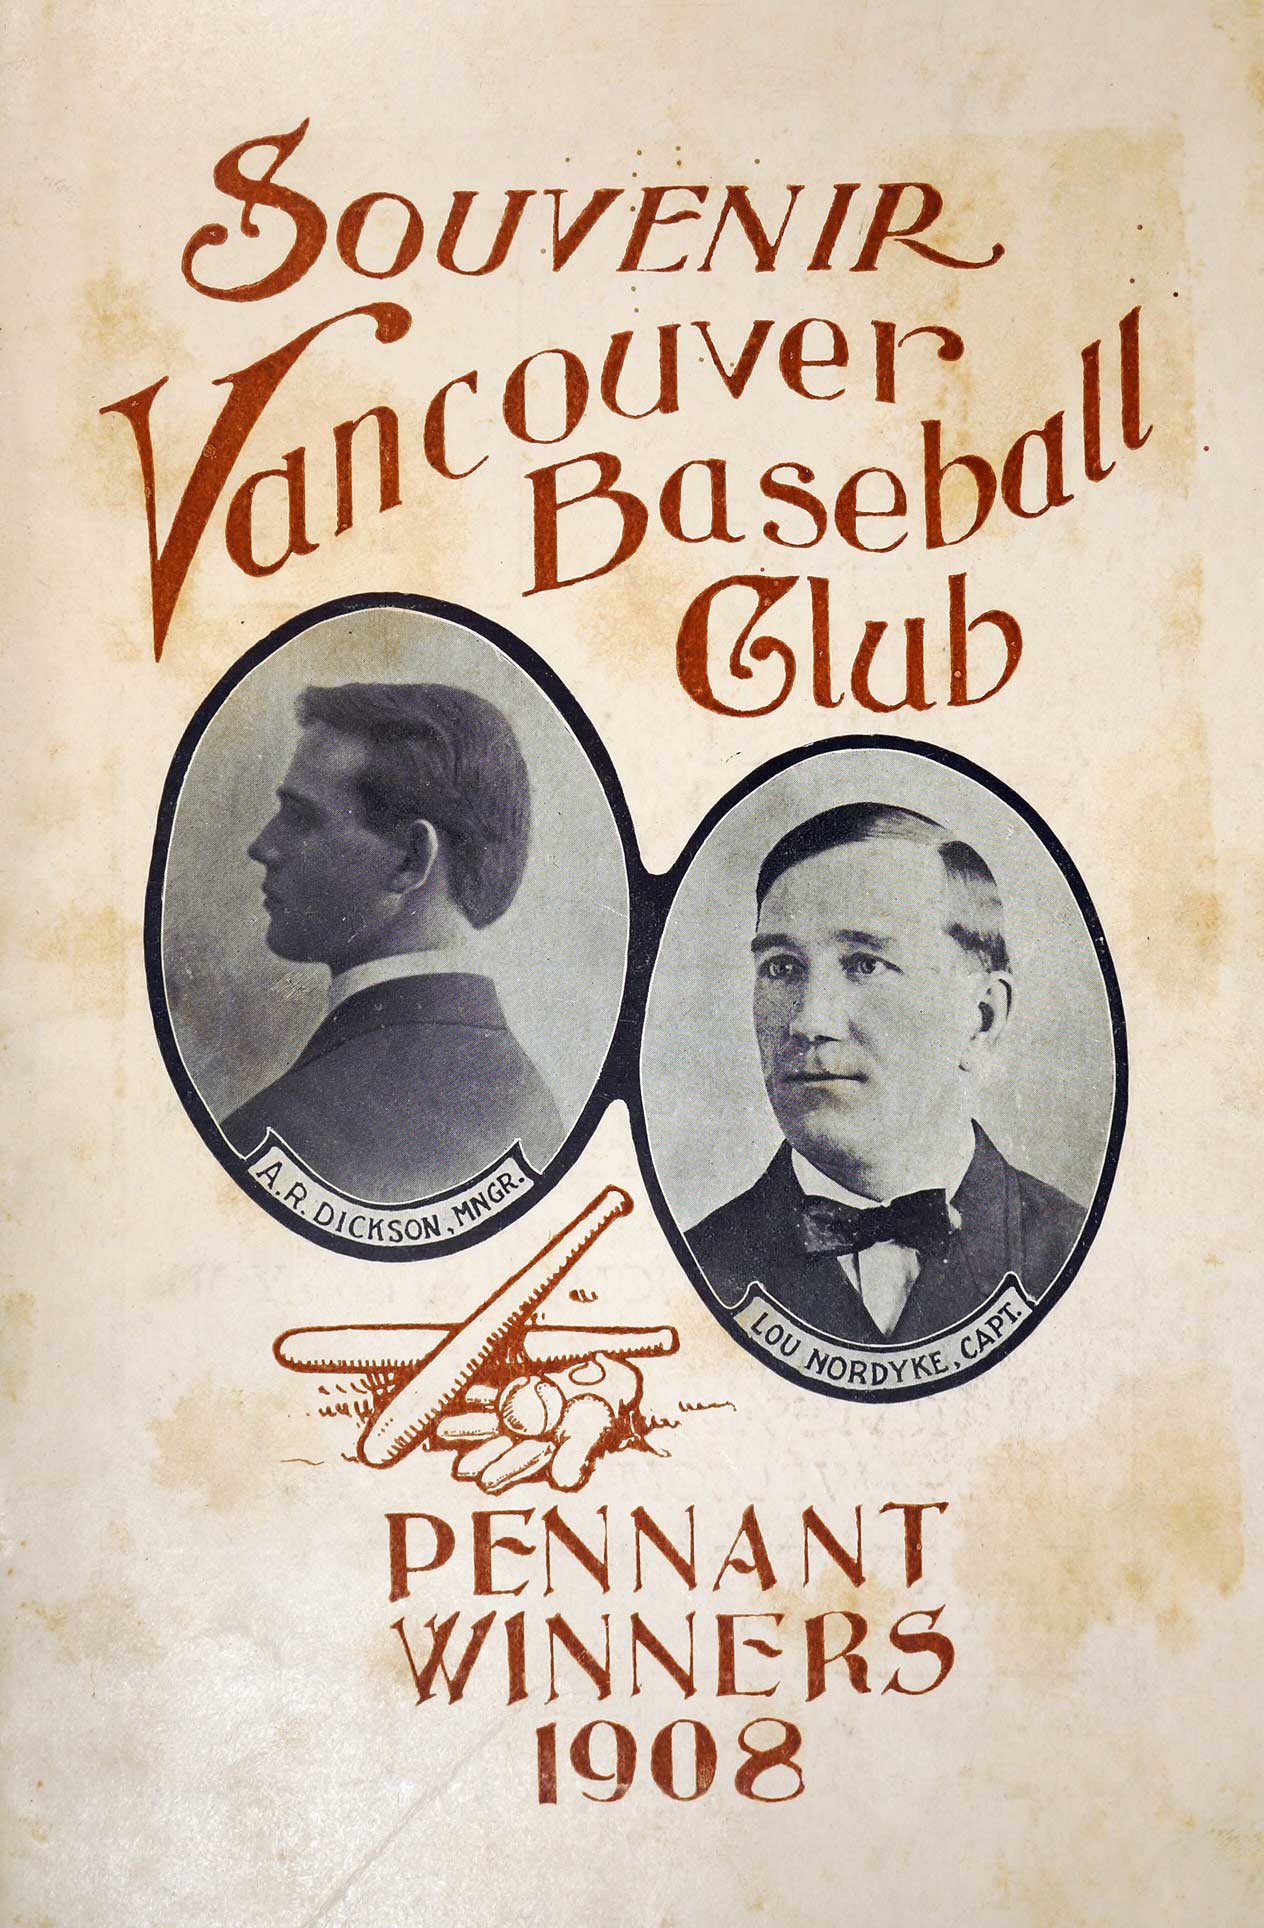 1908 Vancouver, B.C. Baseball Club "Pennant Winners 1908"